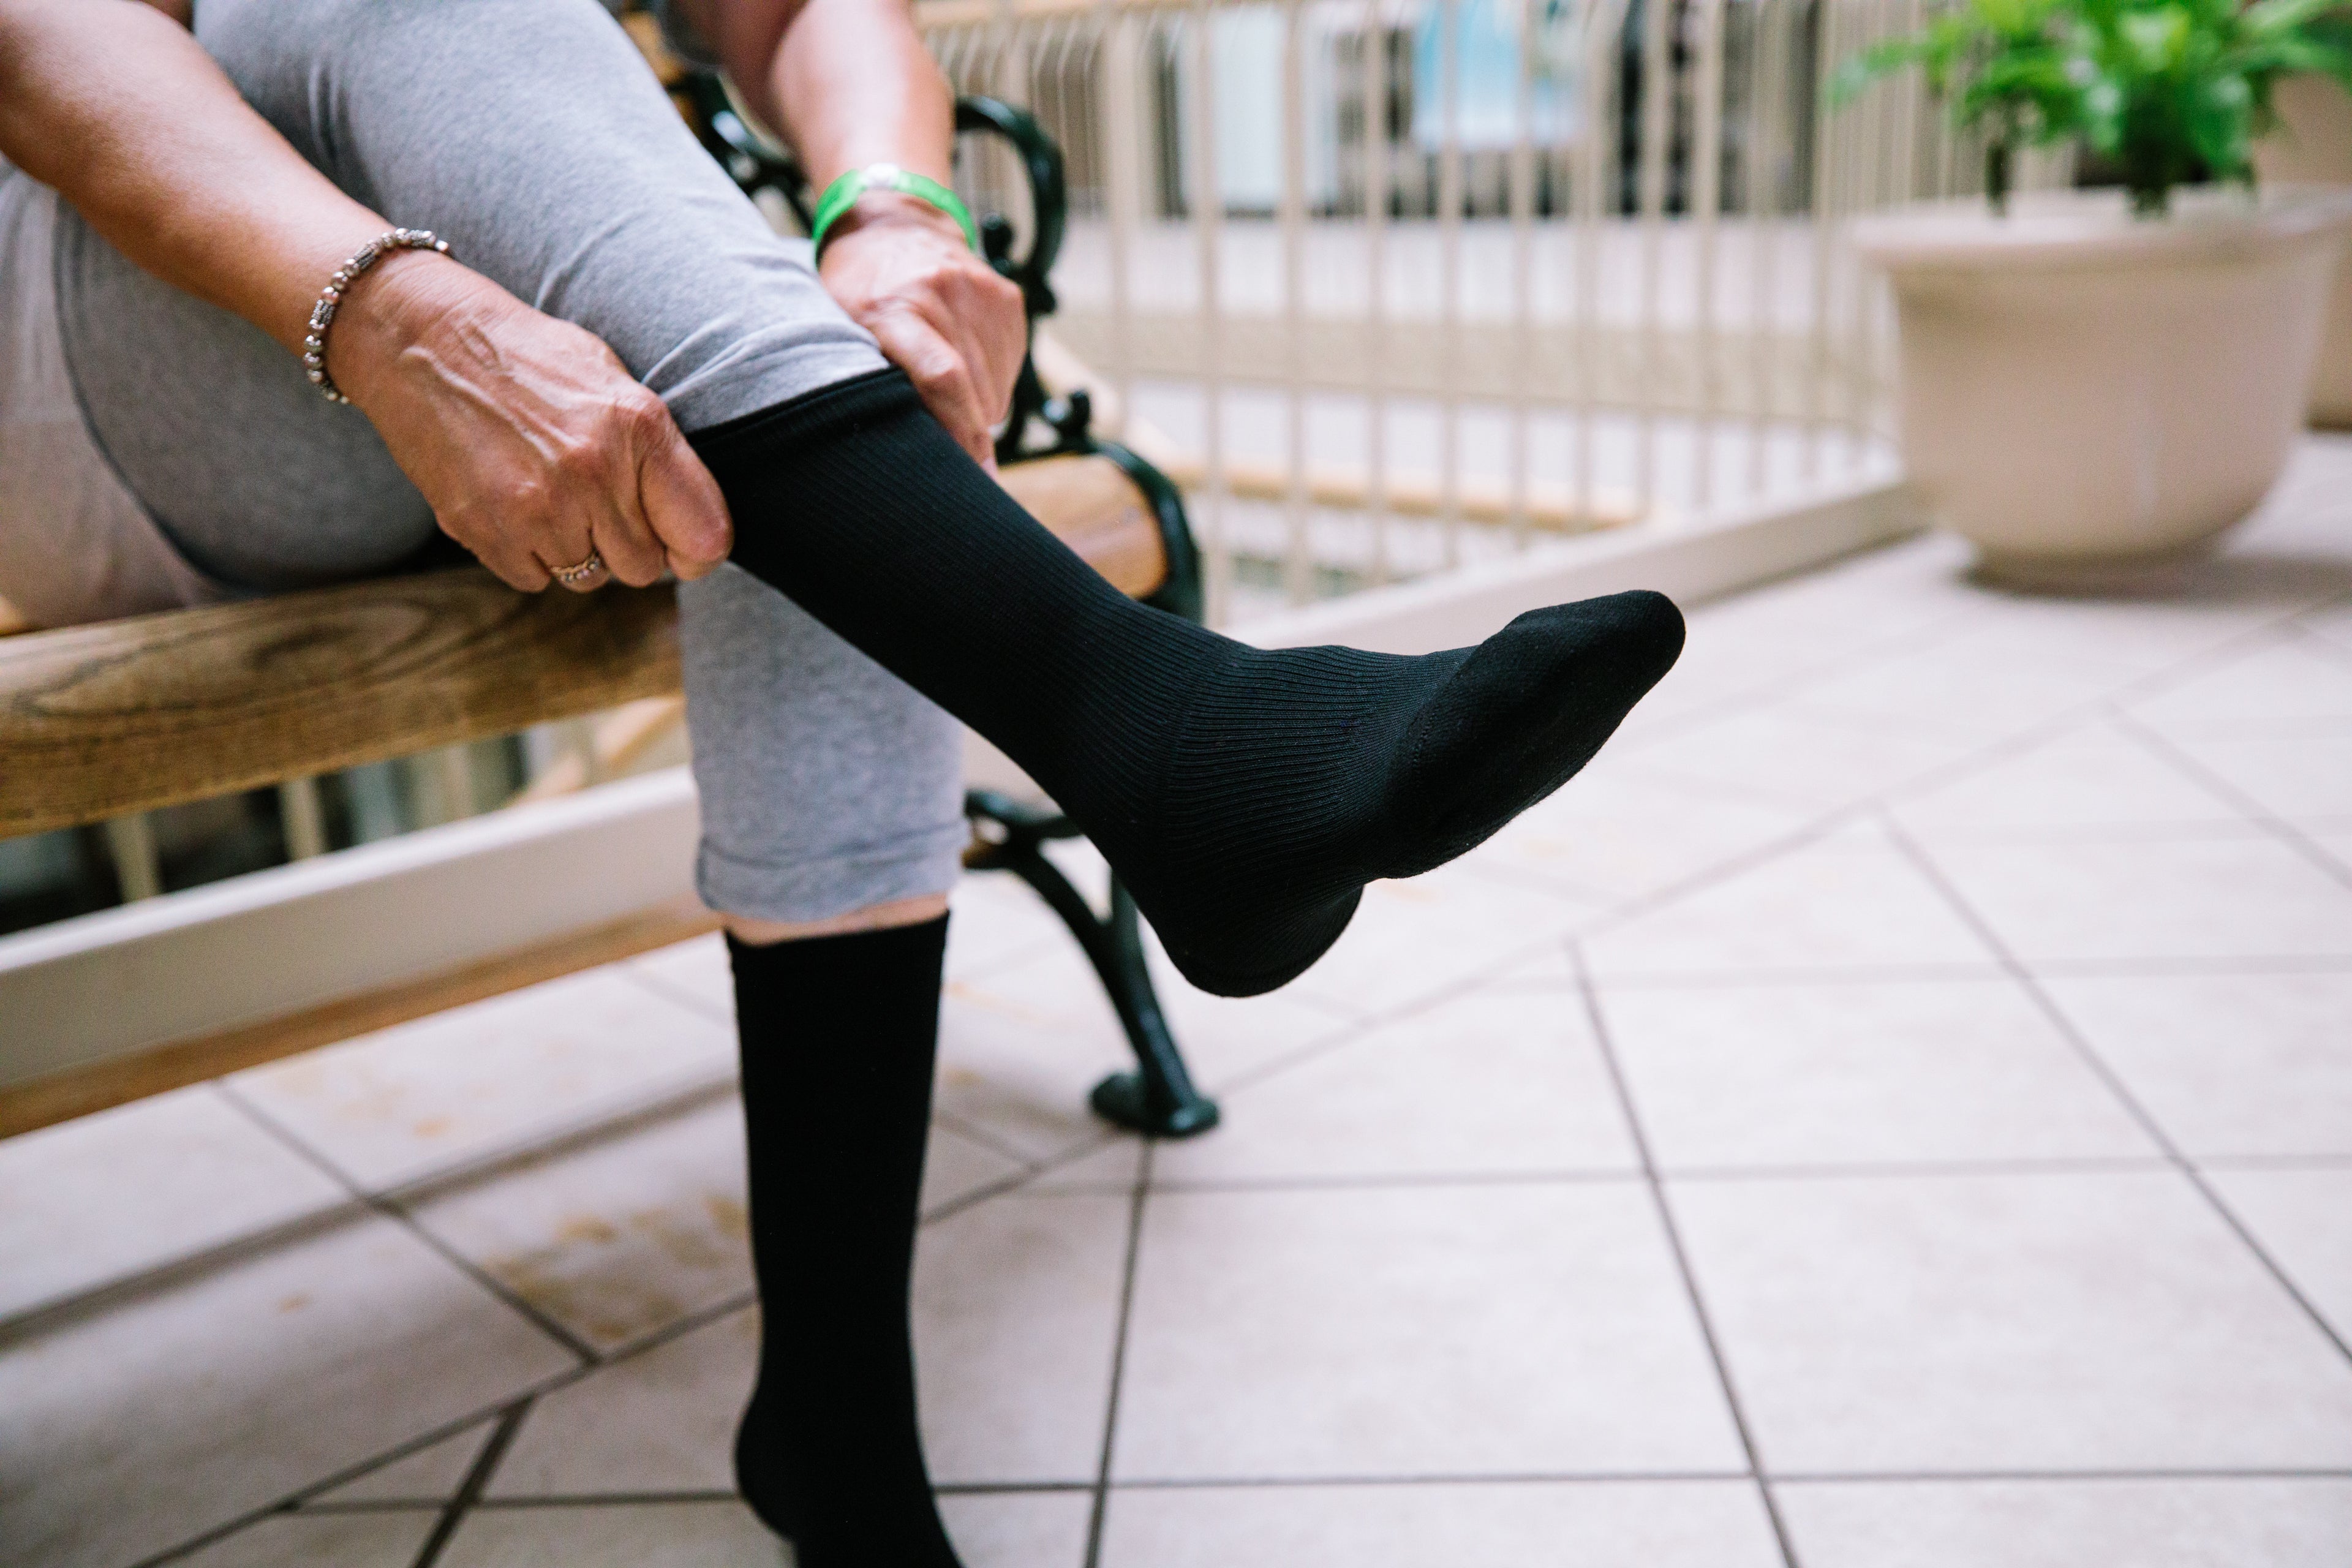 Women's Stay-Put Performance Compression Socks